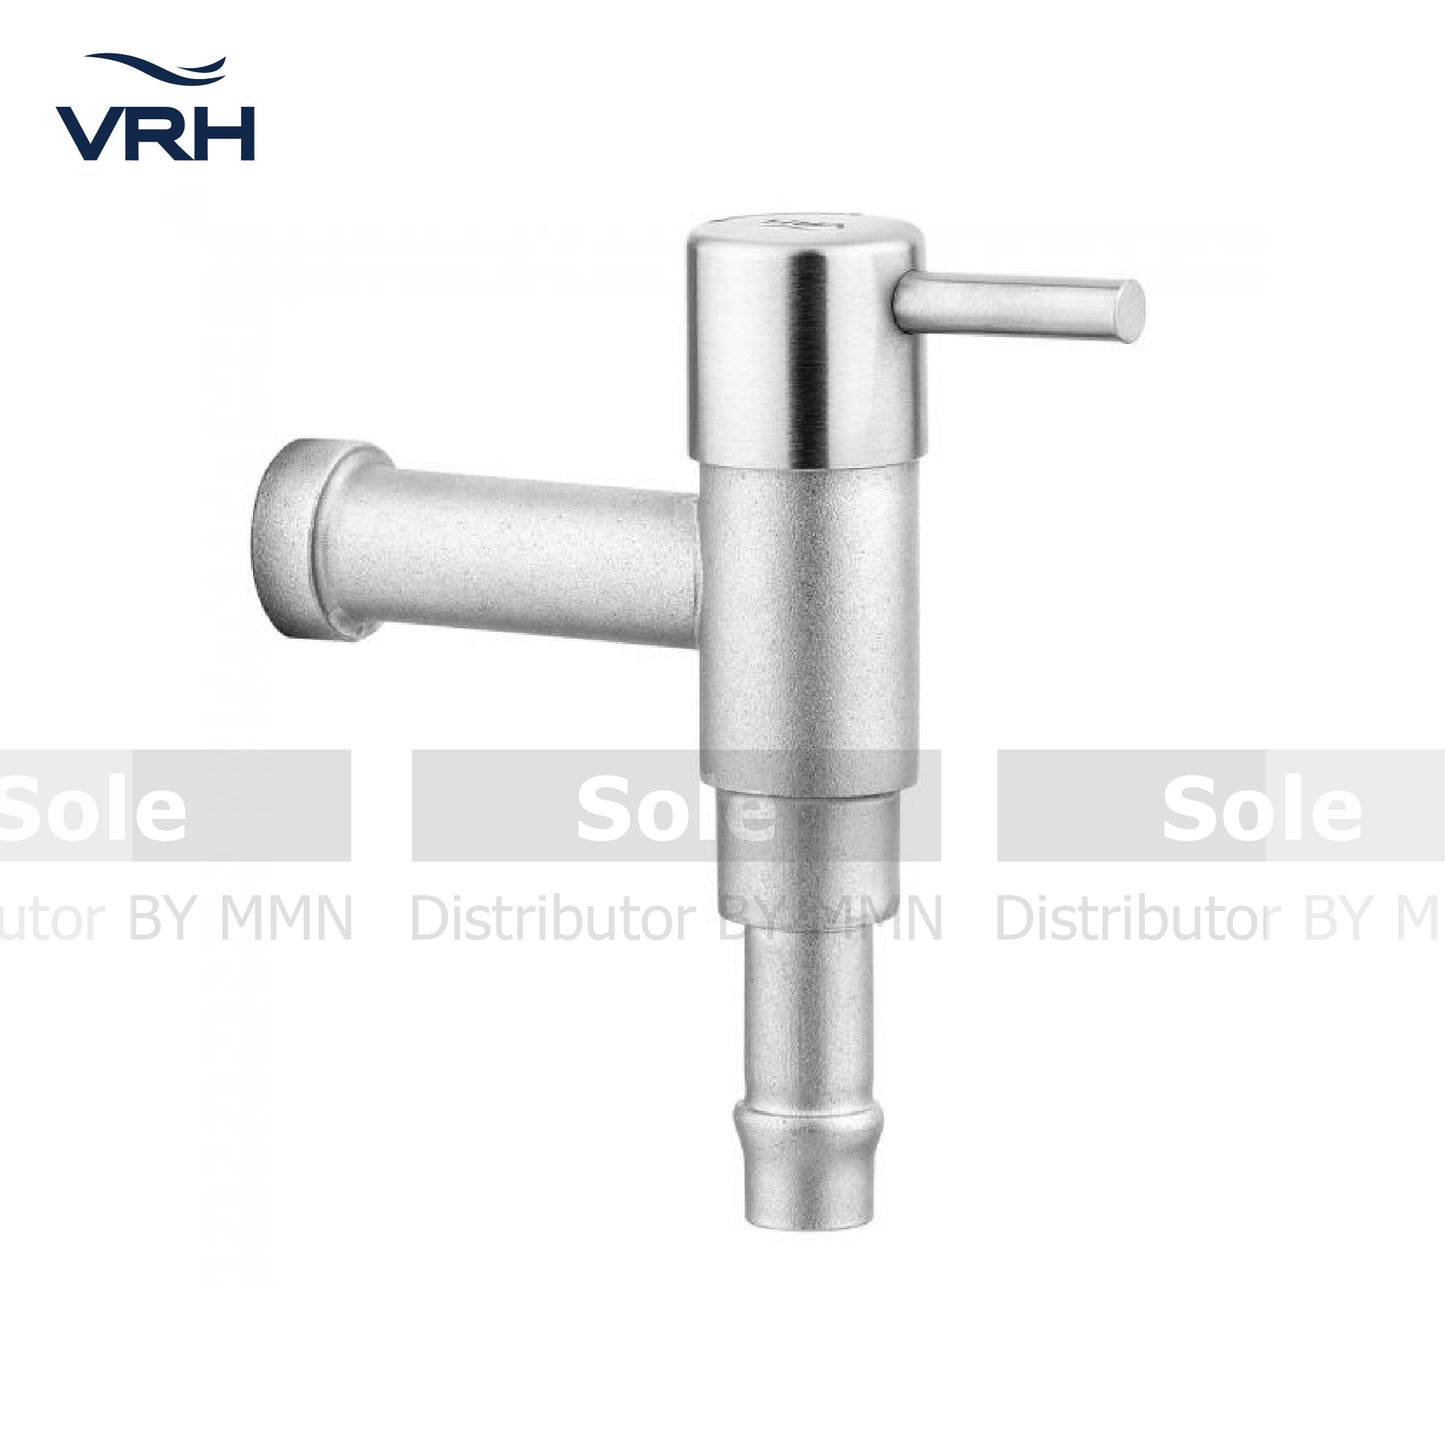 VRH Wall Tap Faucet Single - Bonny Series, Stainless Steel 304- HFVJC.7120K6